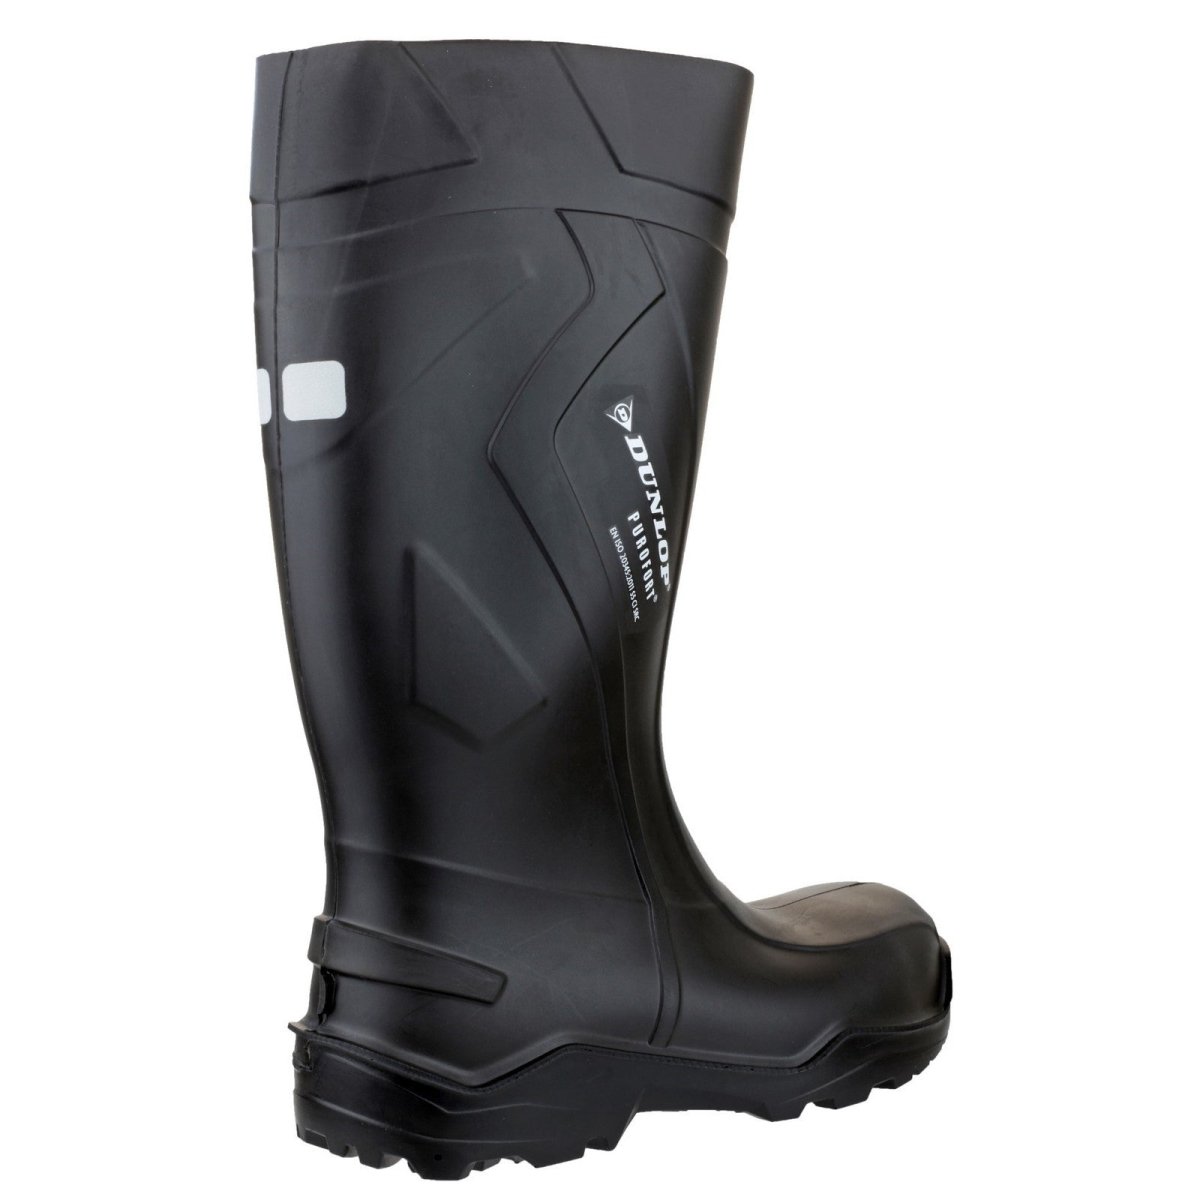 Dunlop Purofort+ Full Safety Wellington Boots - Shoe Store Direct